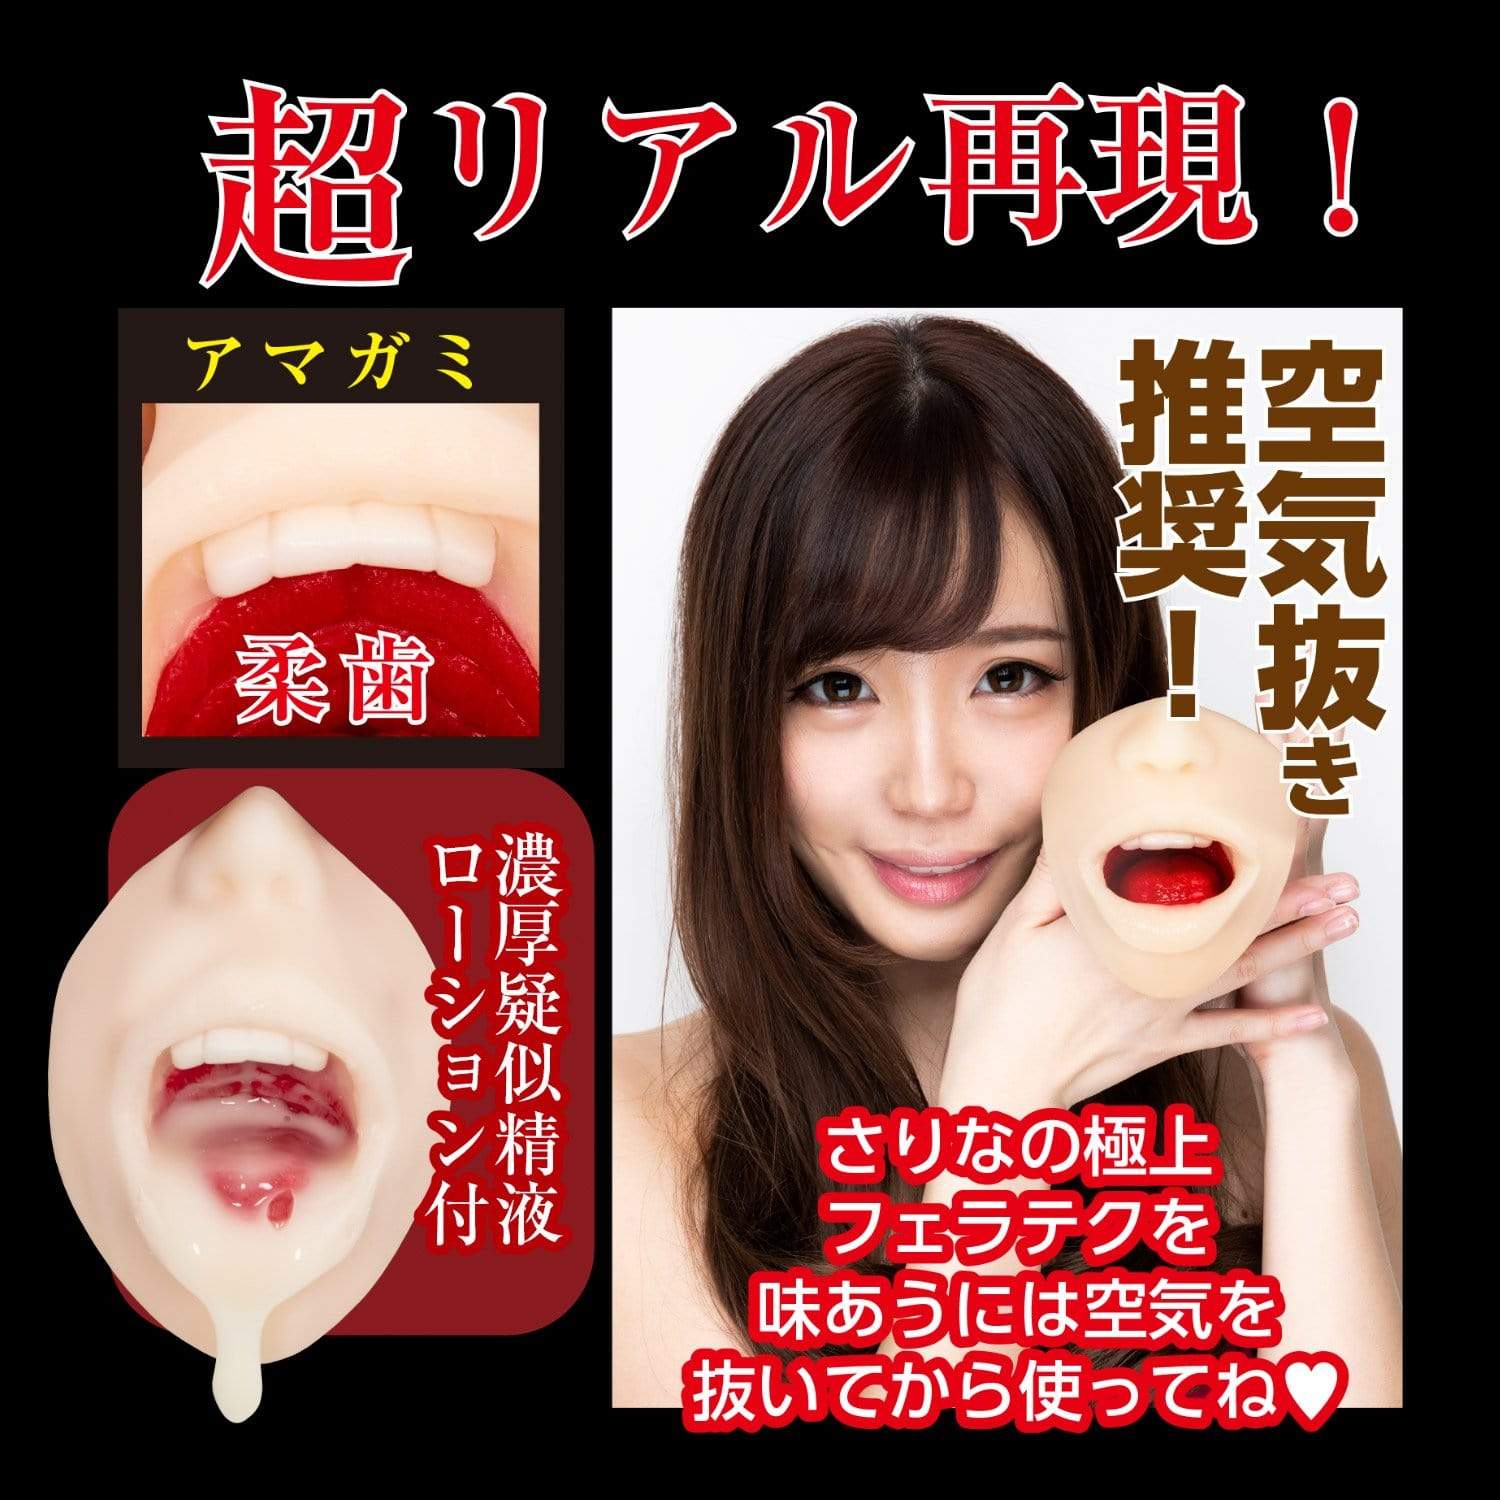 NPG - Super Blow Job Geki Fera Sarina Kurokawa Onahole (Beige) -  Masturbator Mouth (Non Vibration)  Durio.sg